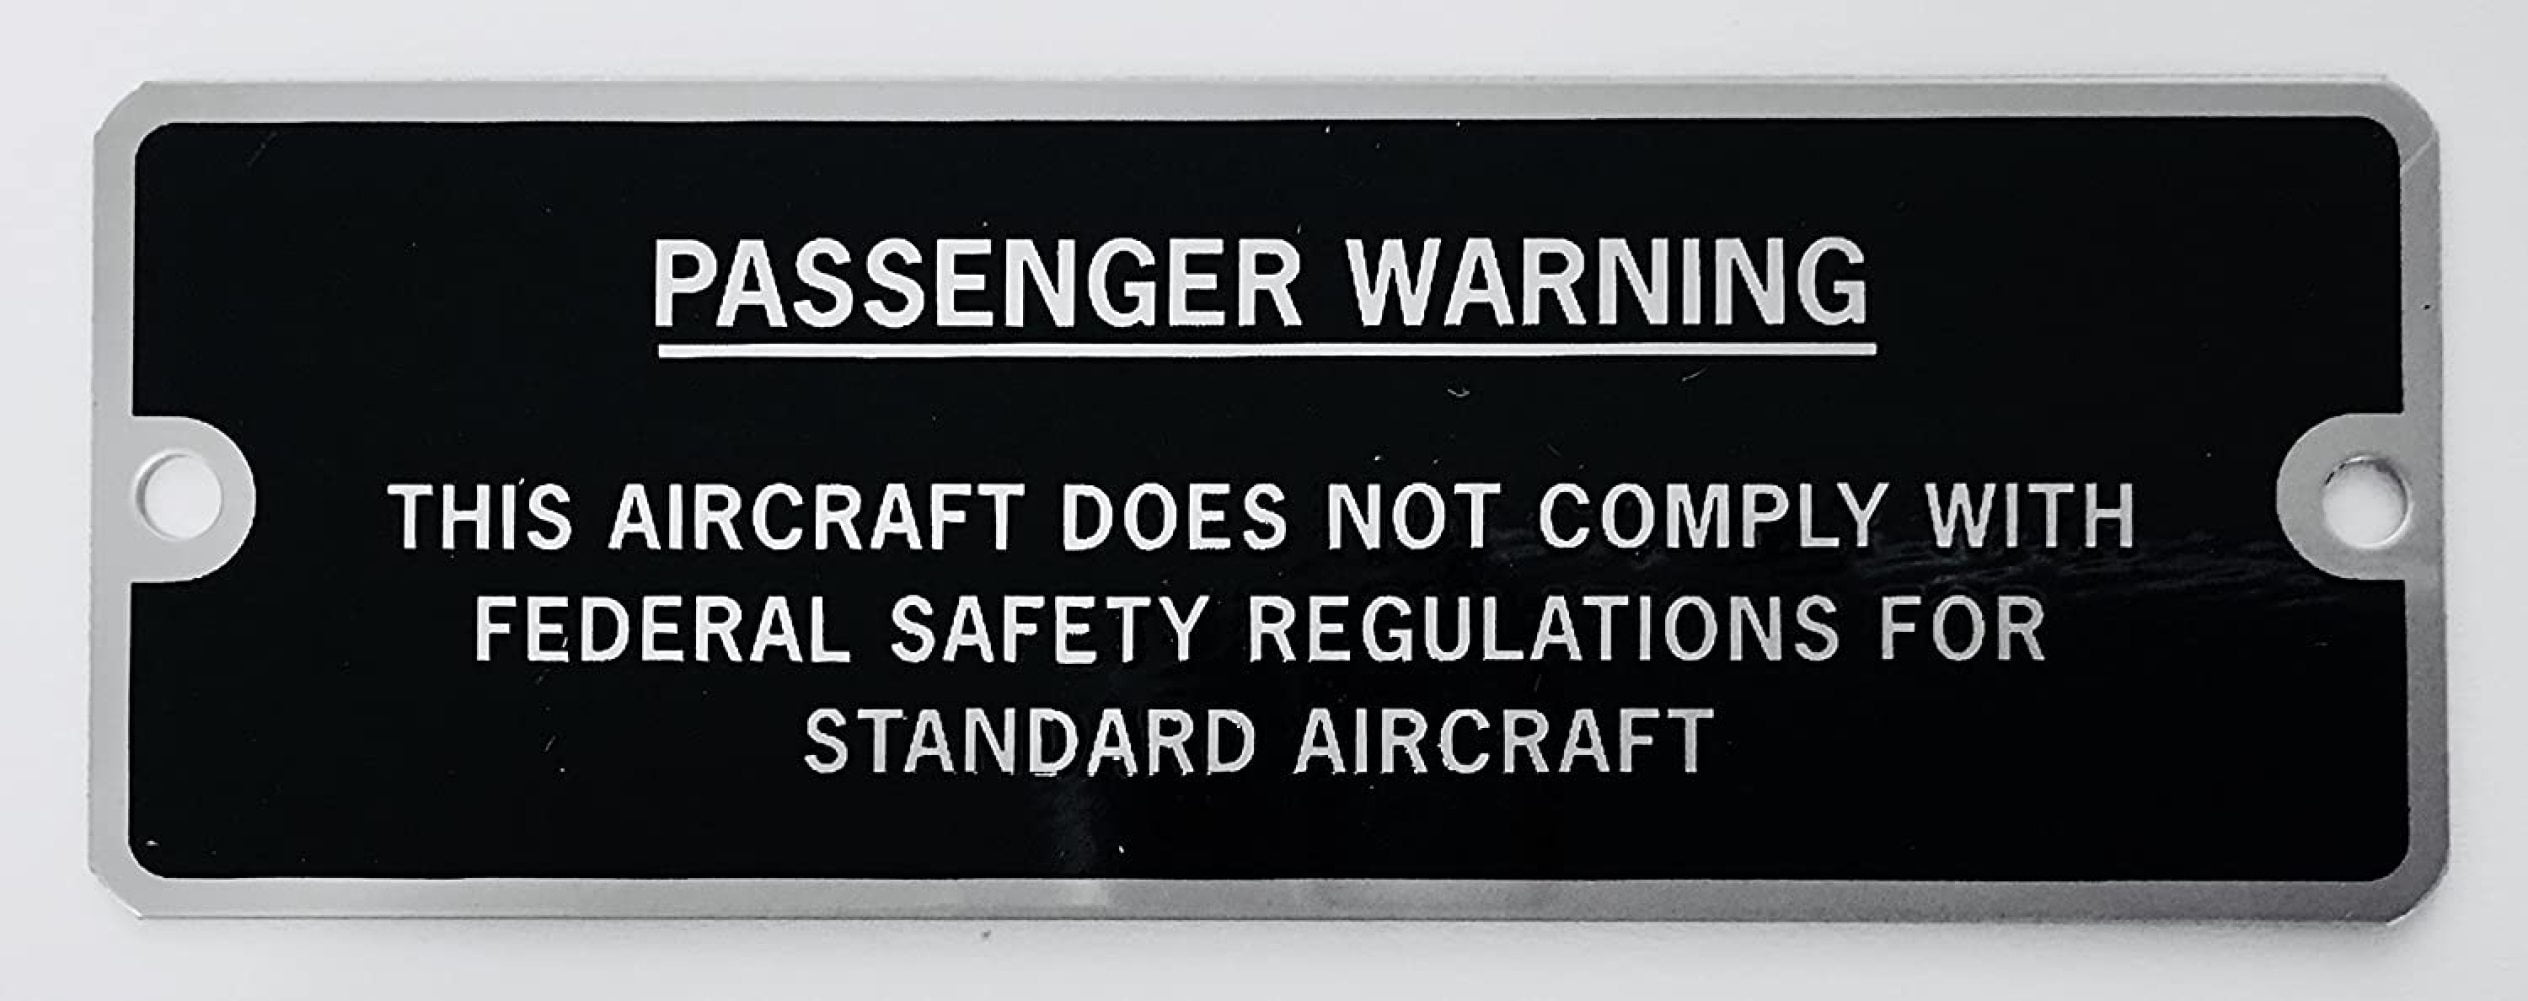 Amateur-Built Passenger Warning Experimental Aircraft Placard